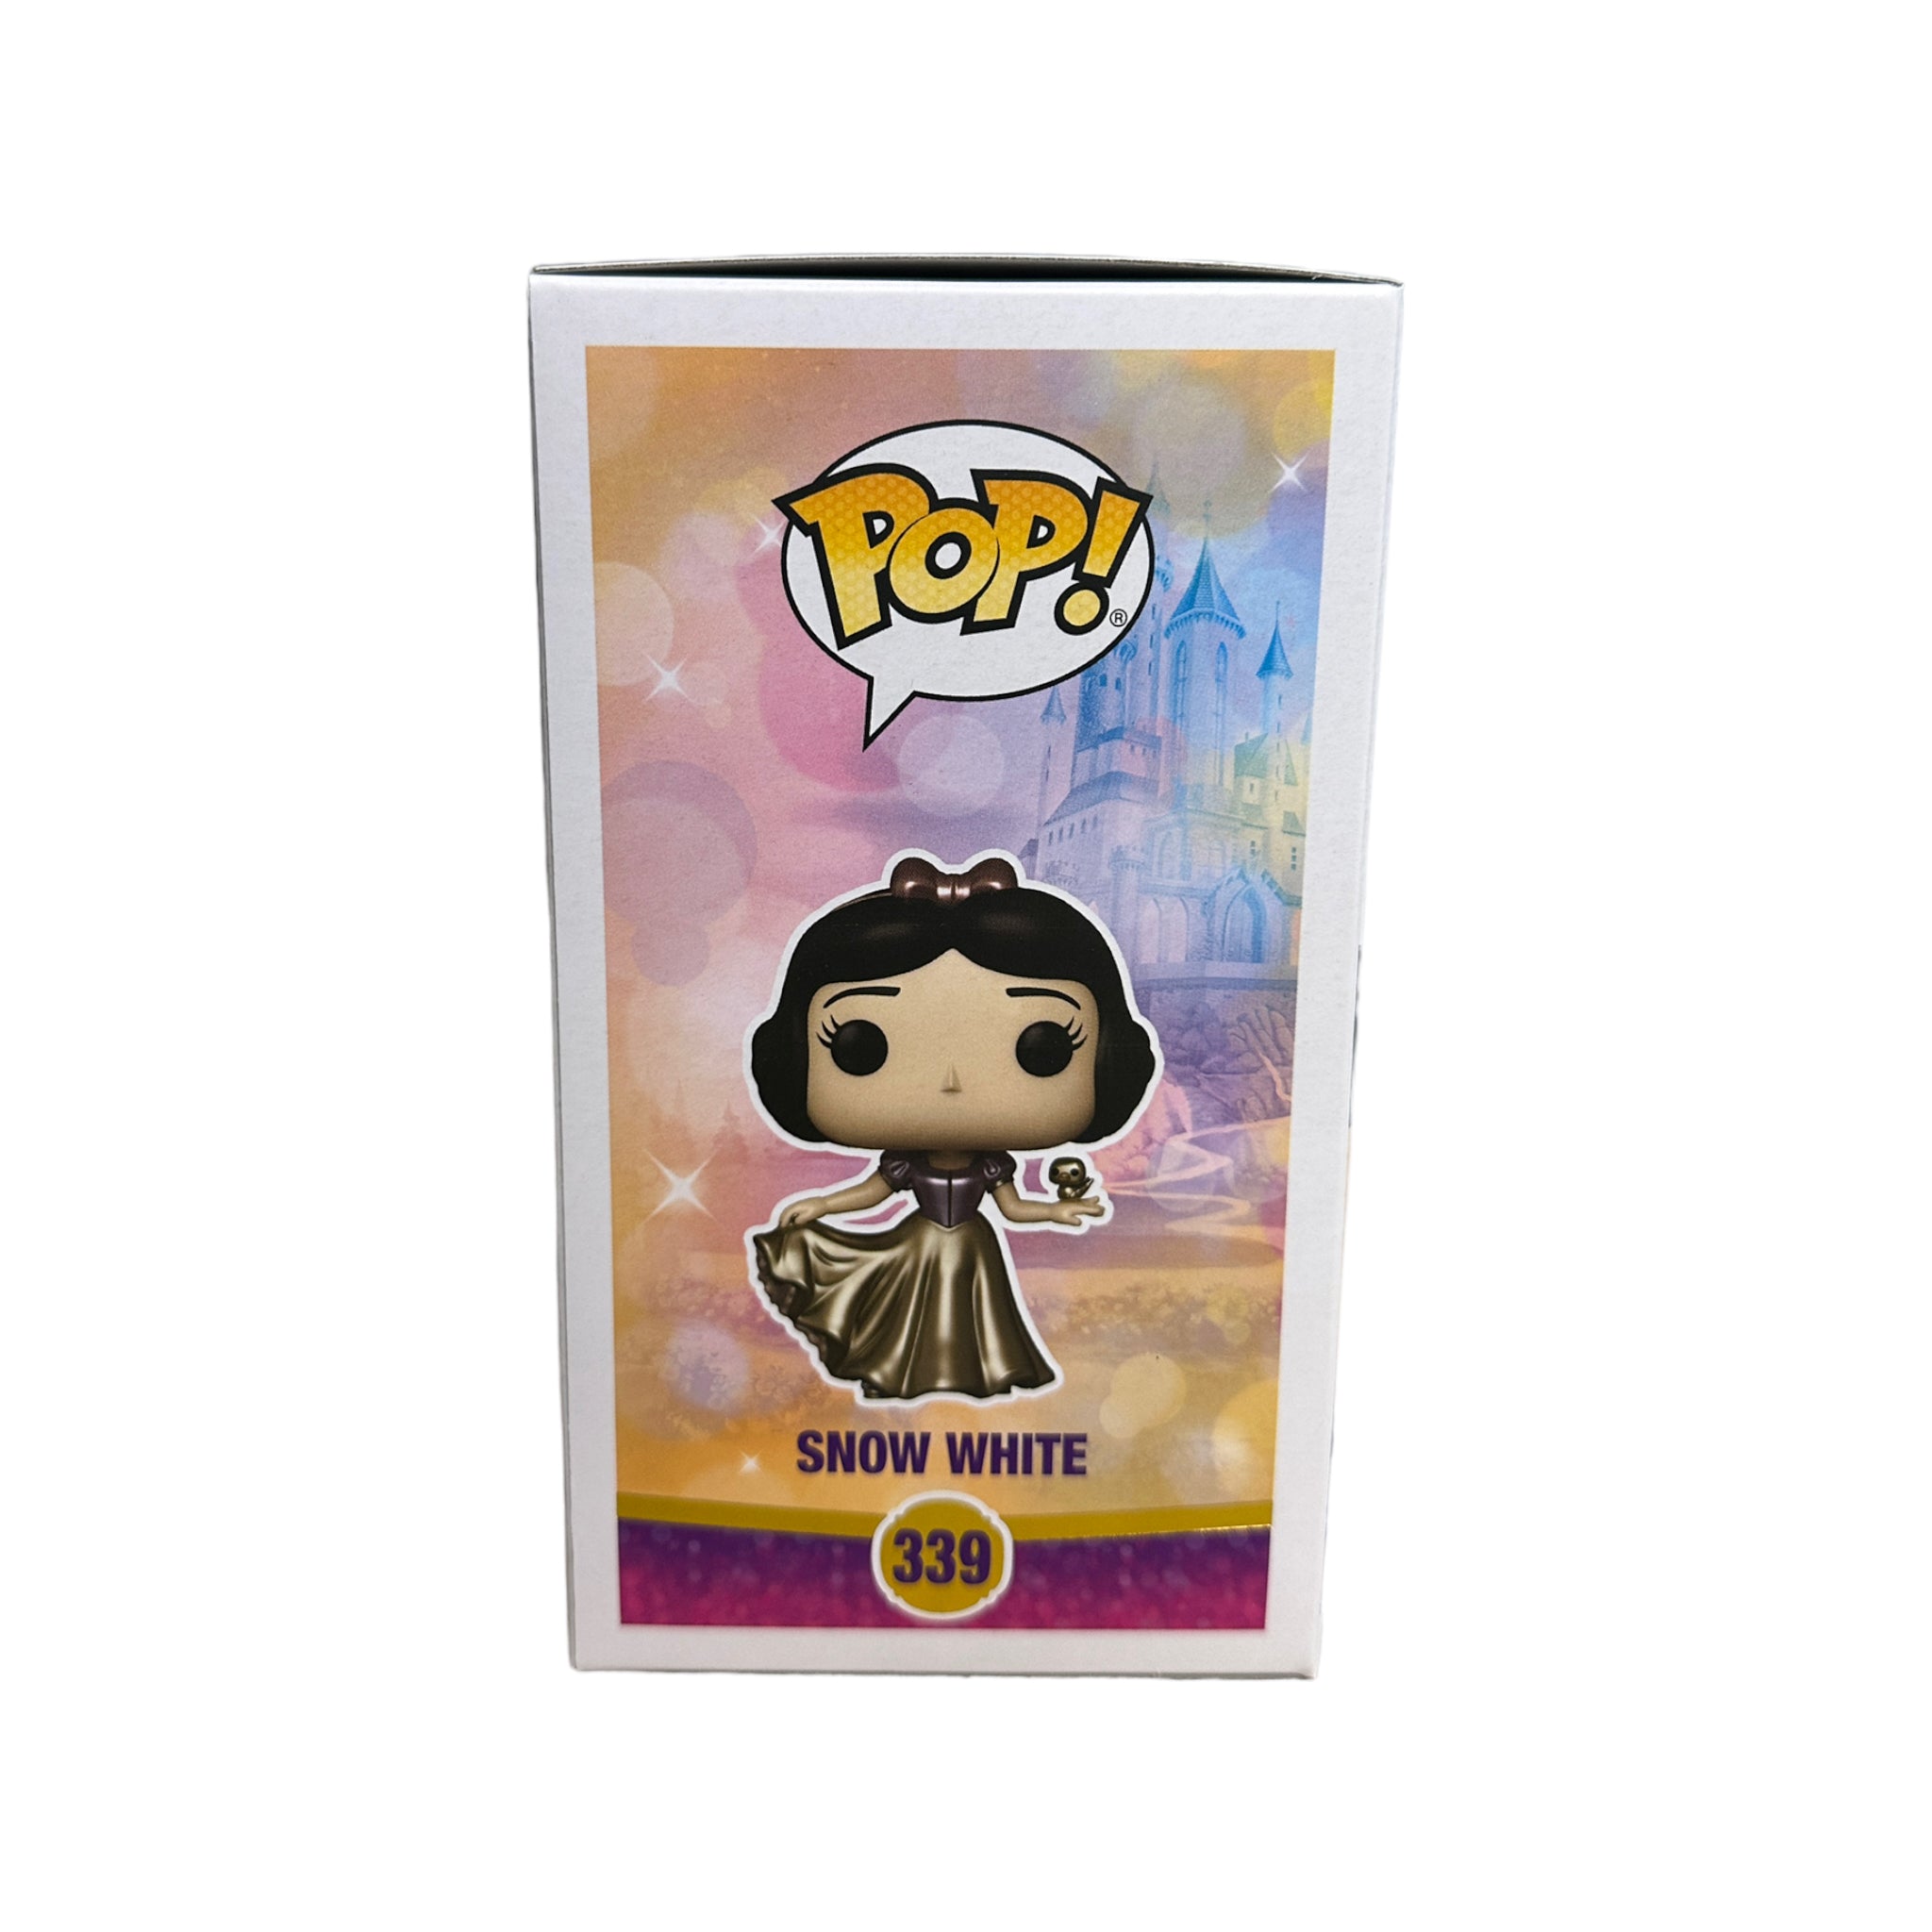 Snow White #339 (Dancing Gold) Funko Pop! - Disney Princess - Virtual Funkon 2021 First to Market Exclusive - Condition 9.5/10